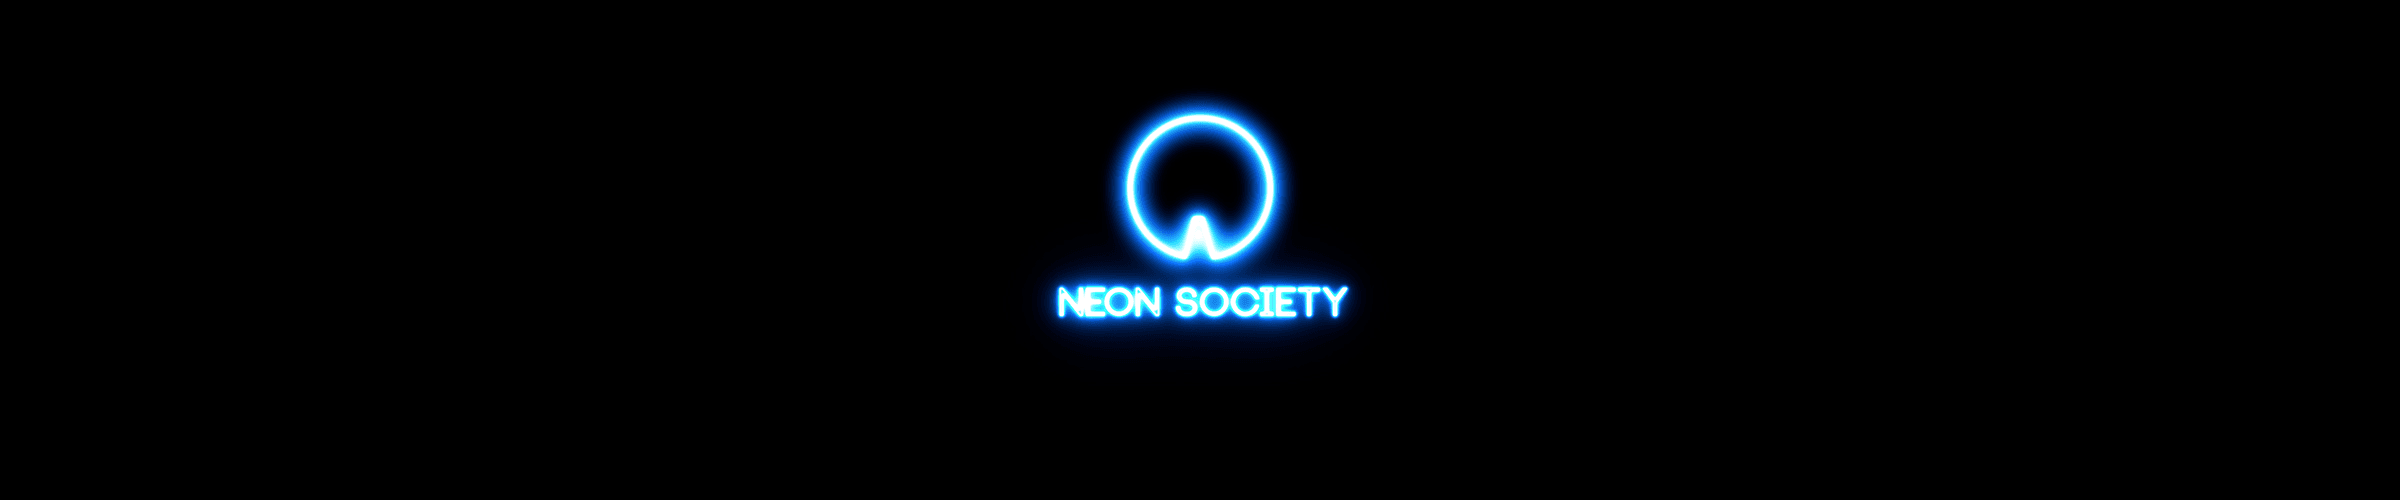 Neon_Society_Team 横幅